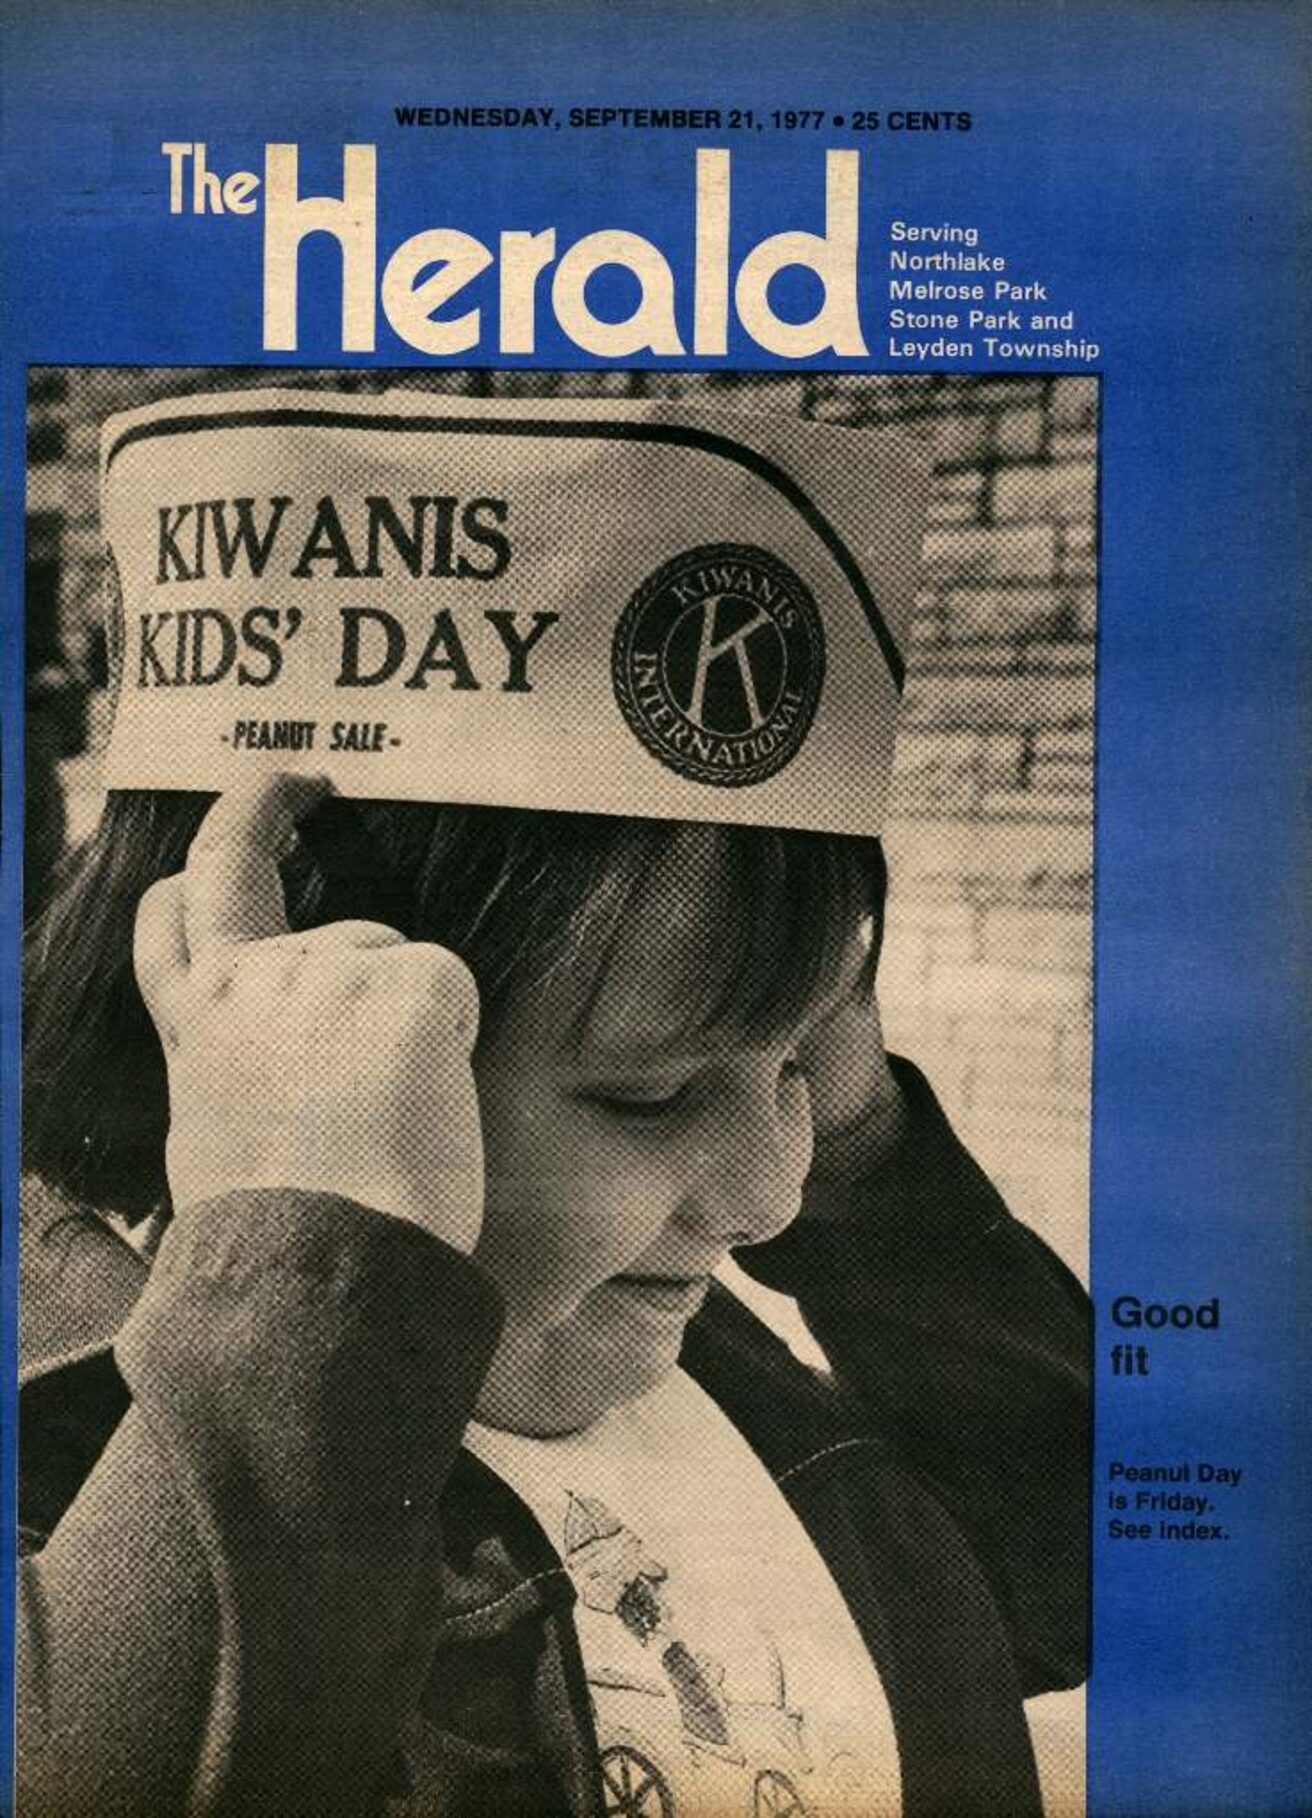 The Herald – 19770921